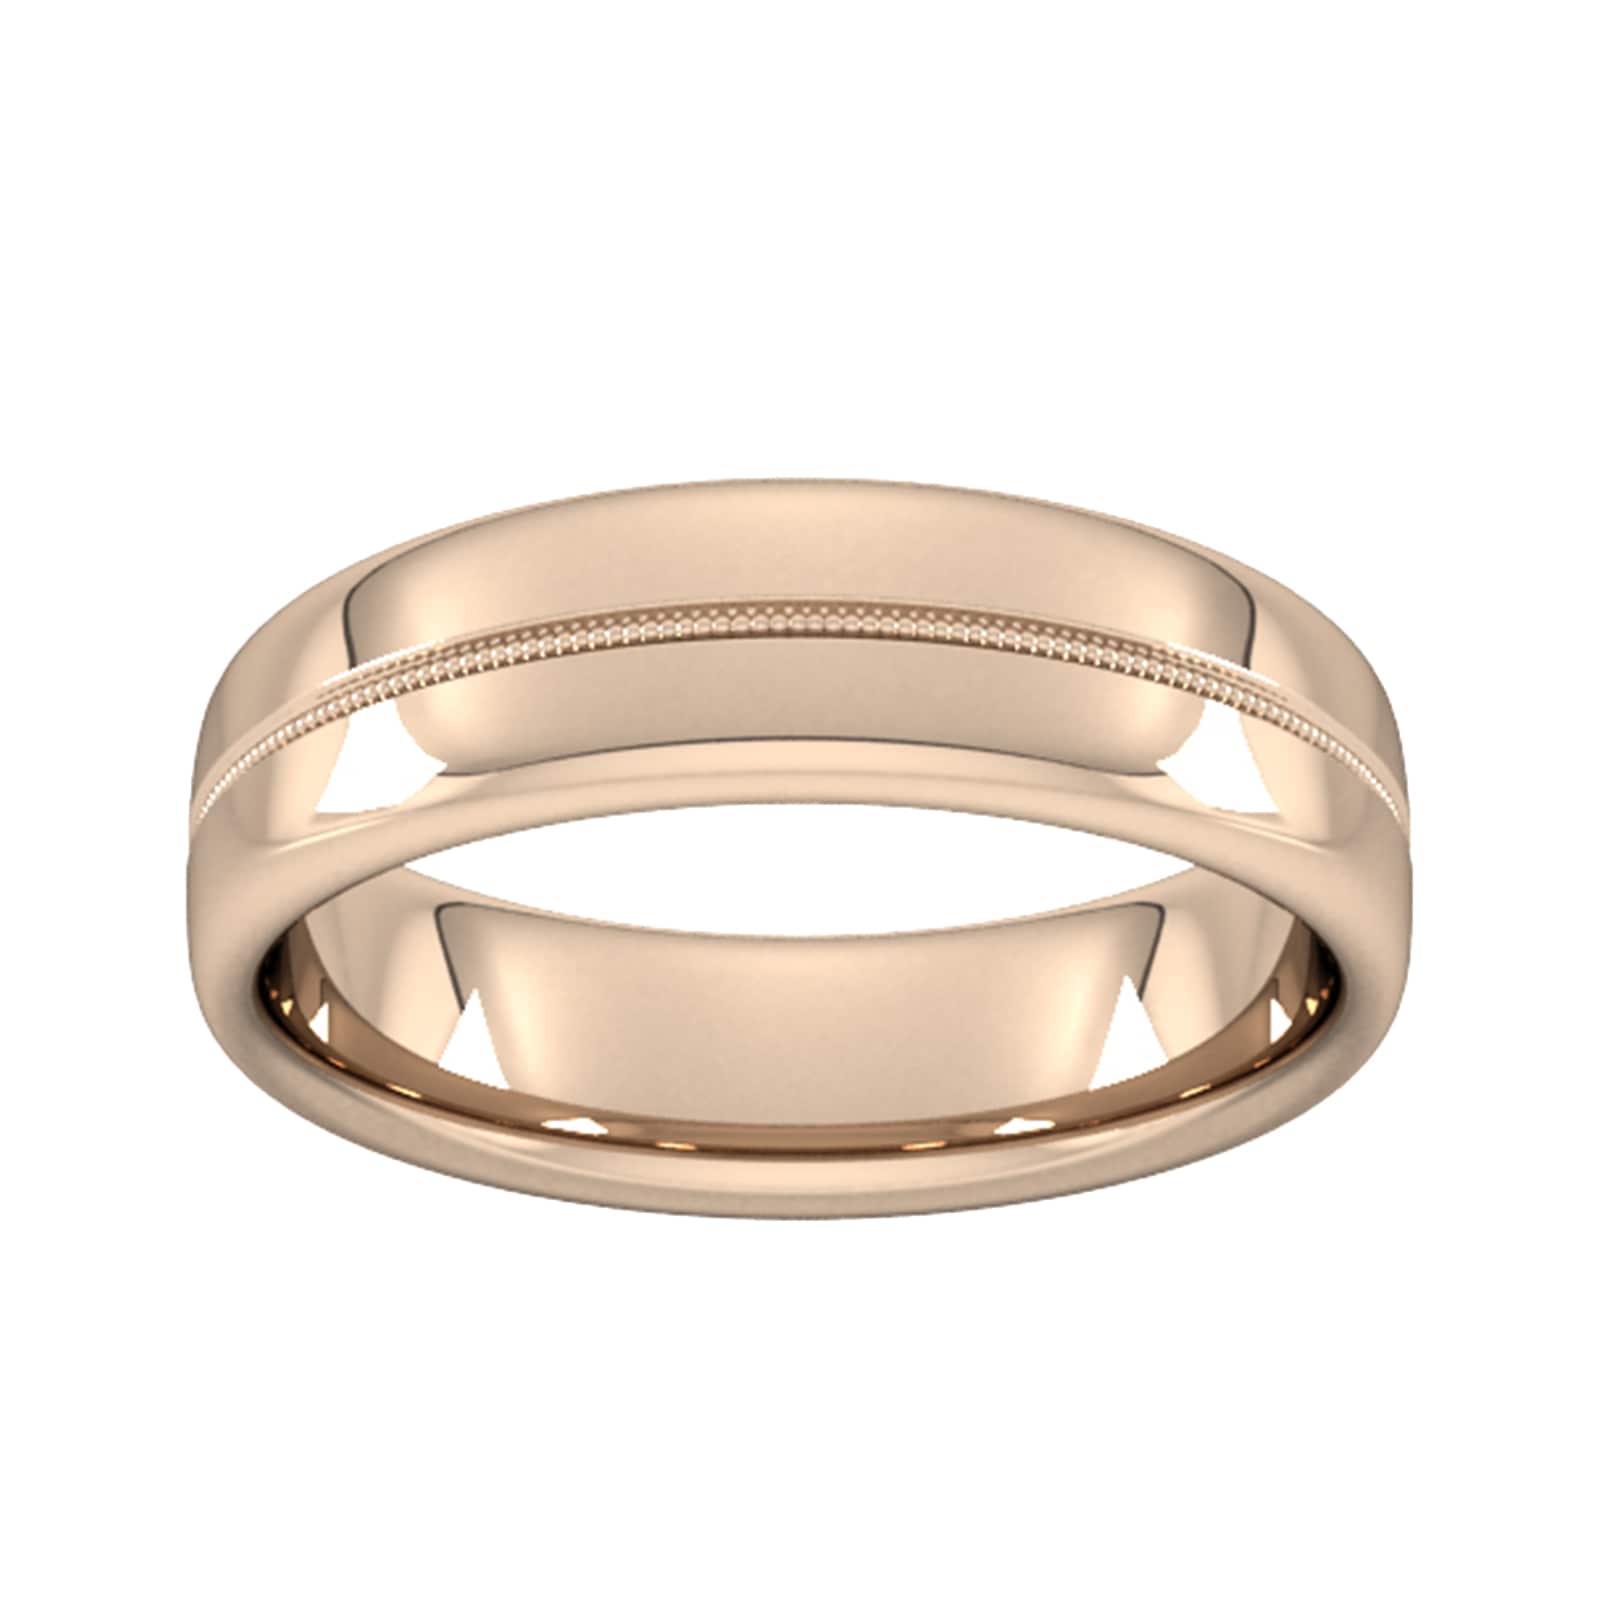 6mm slight court standard milgrain centre wedding ring in 18 carat rose gold - ring size u